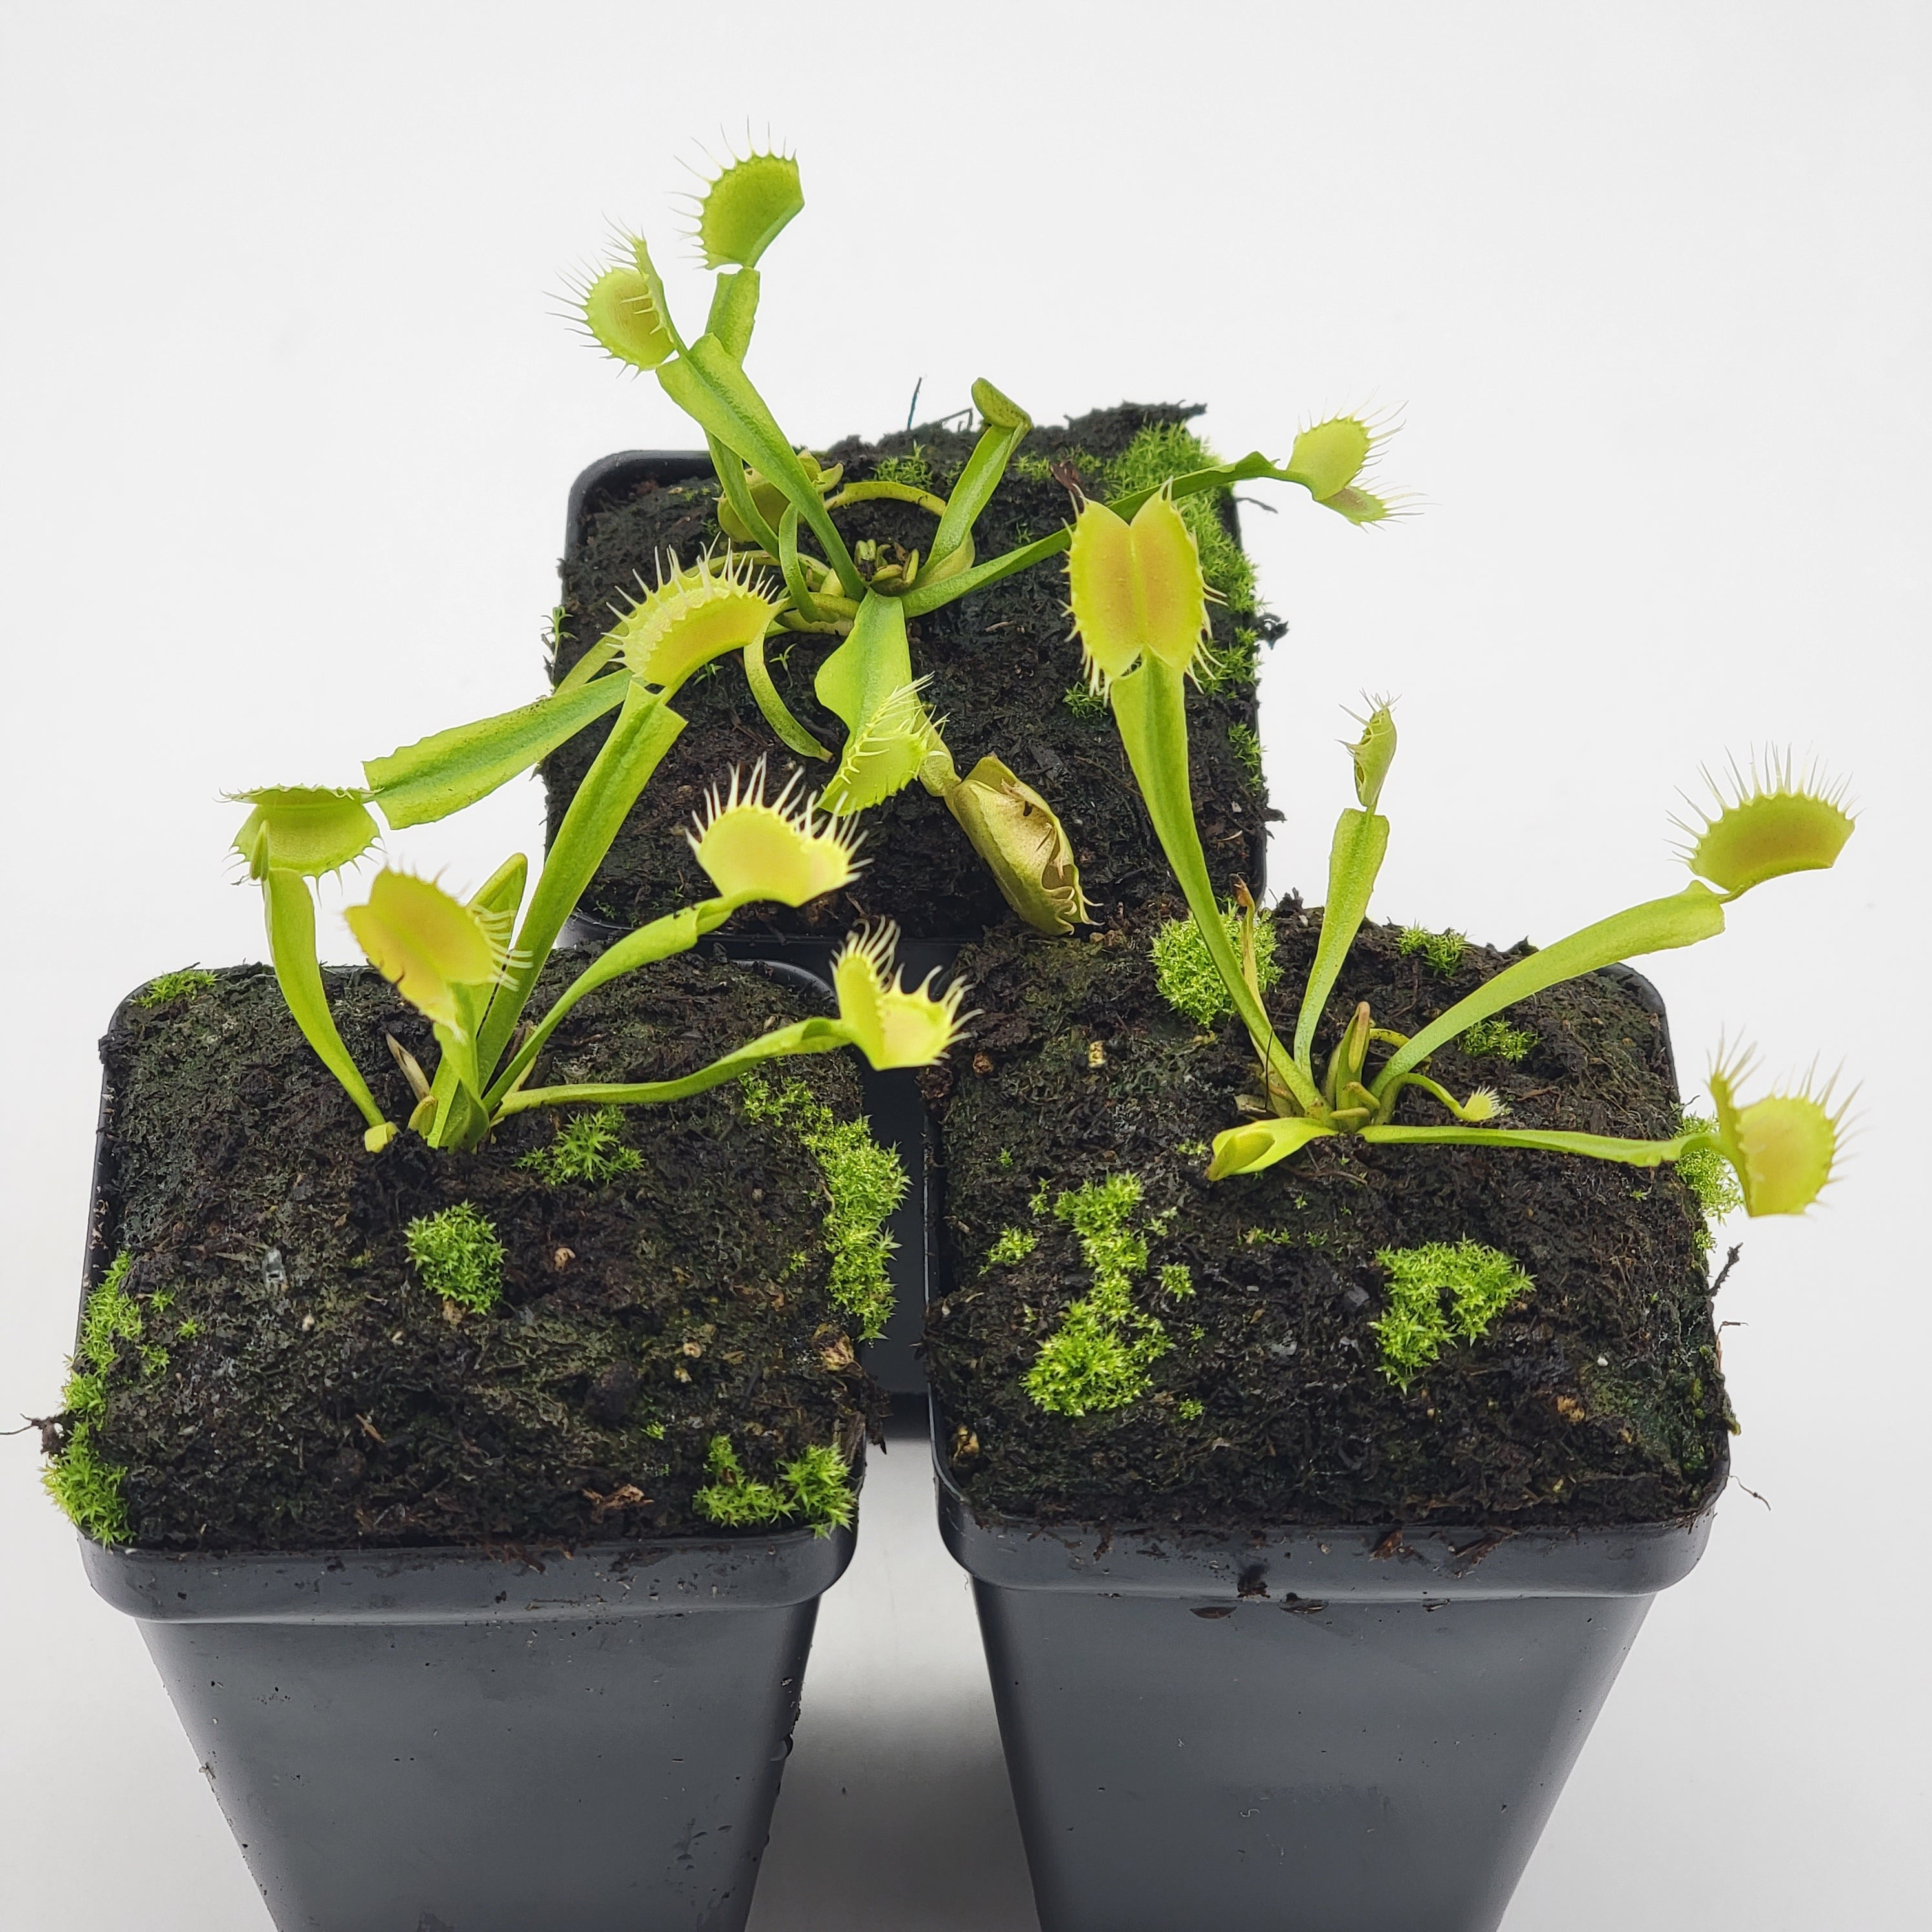 Venus flytrap (Dionaea muscipula) 'Crispy sun' - Rainbow Carnivorous Plants LLC